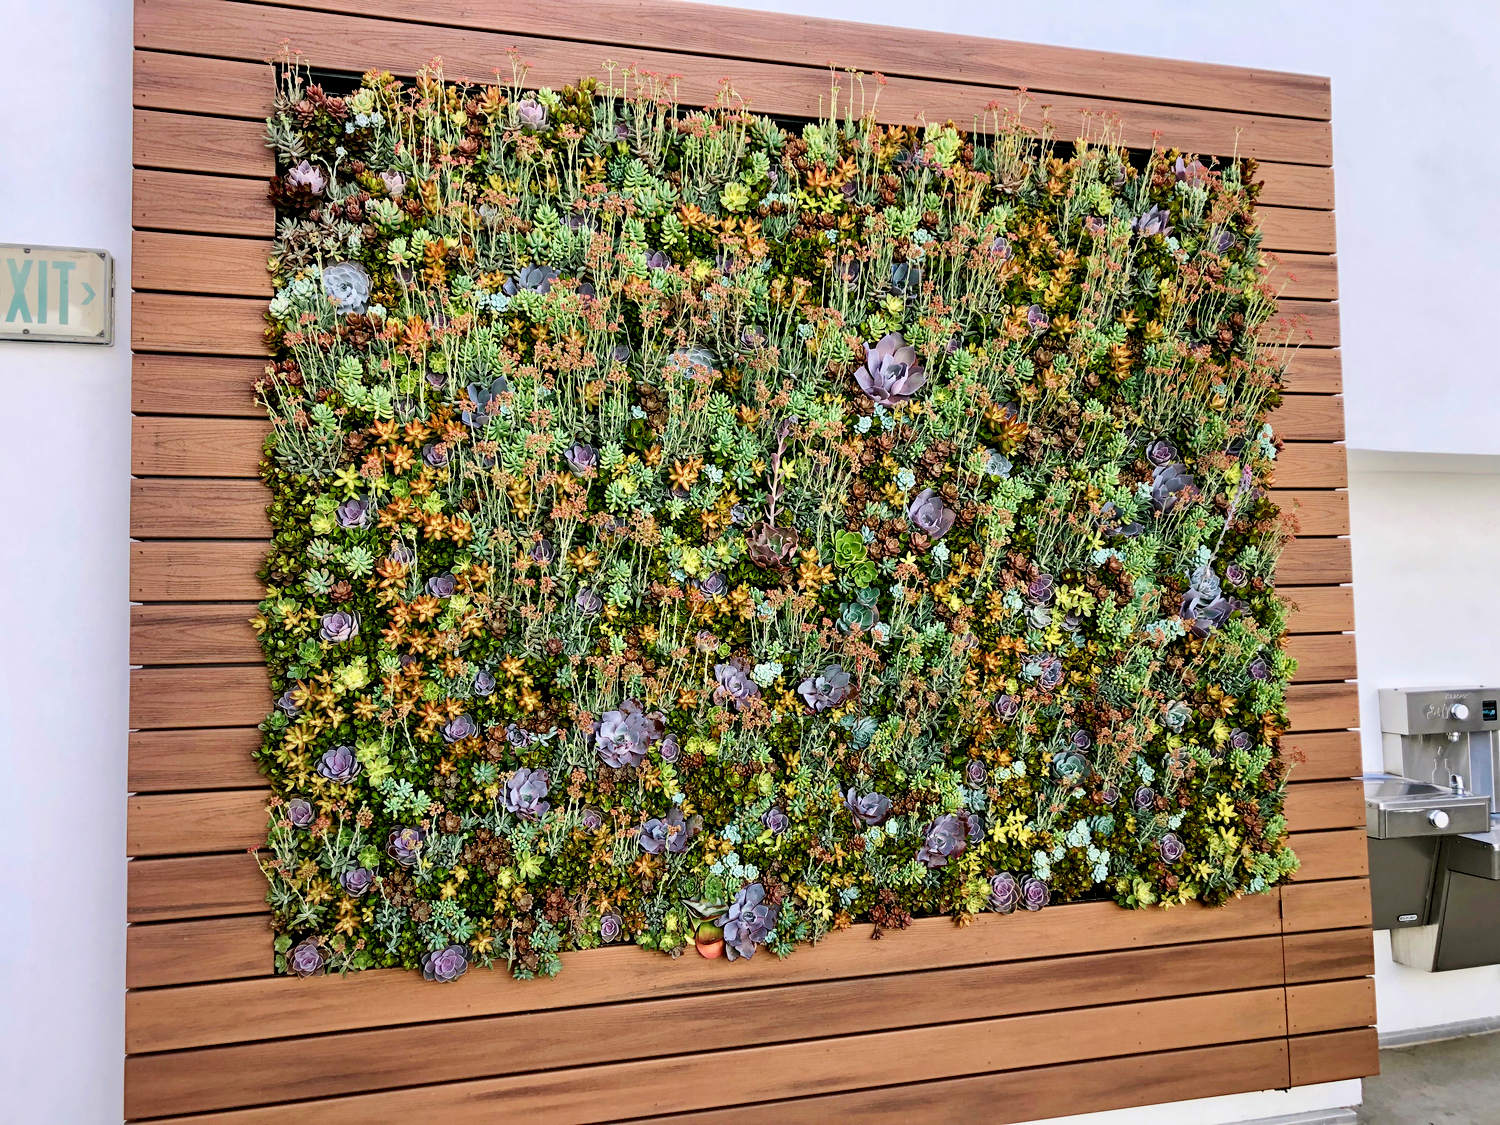 SDSU – Succulent Plant Wall